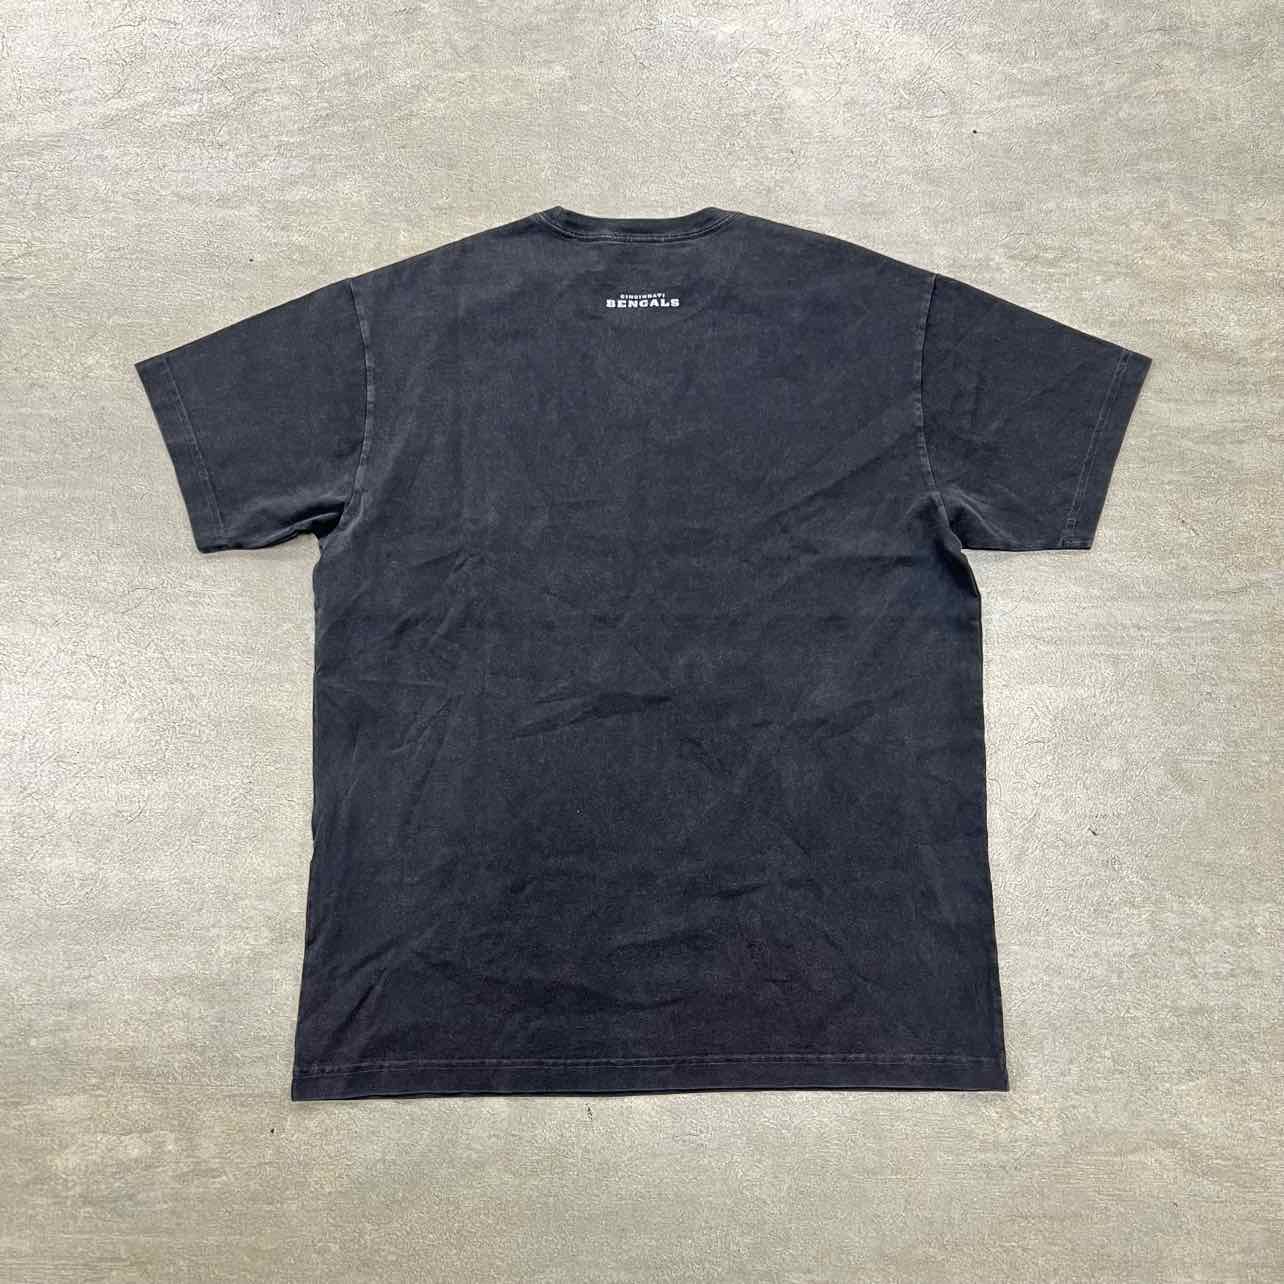 Kith T-Shirt "BENGALS" Black New Size M